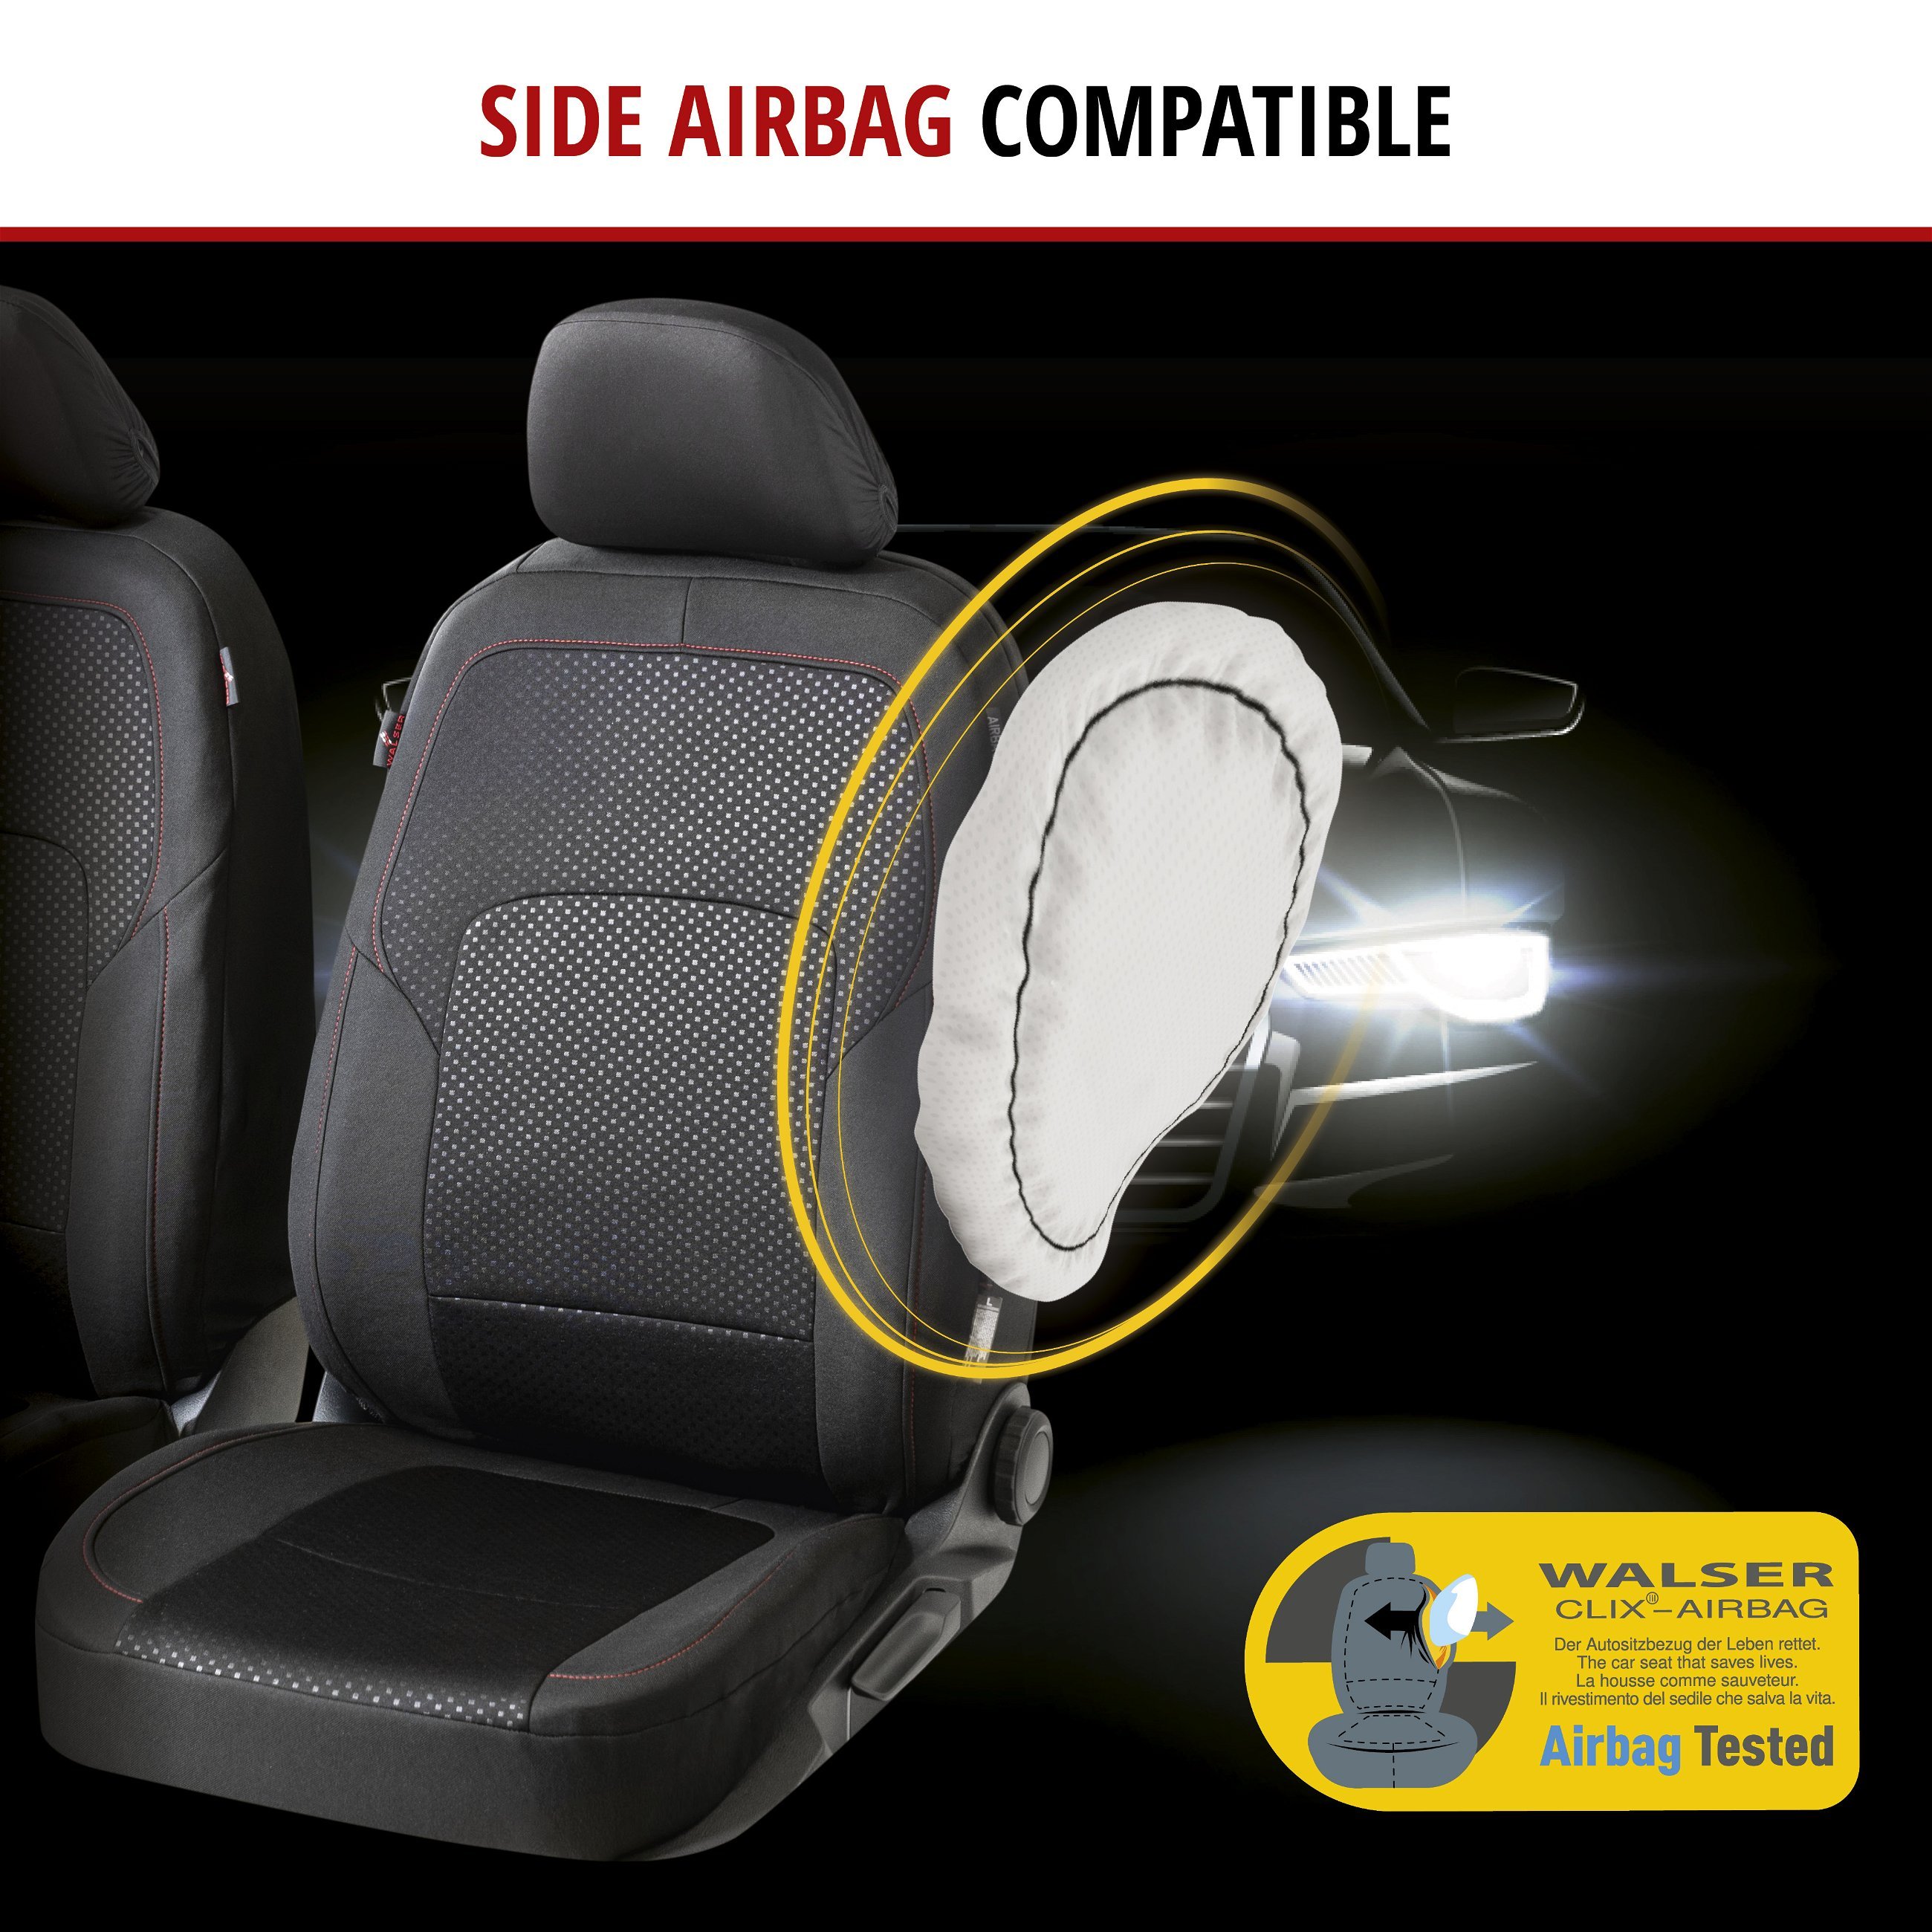 ZIPP IT Premium Car seat covers Logan complete set with zip-system